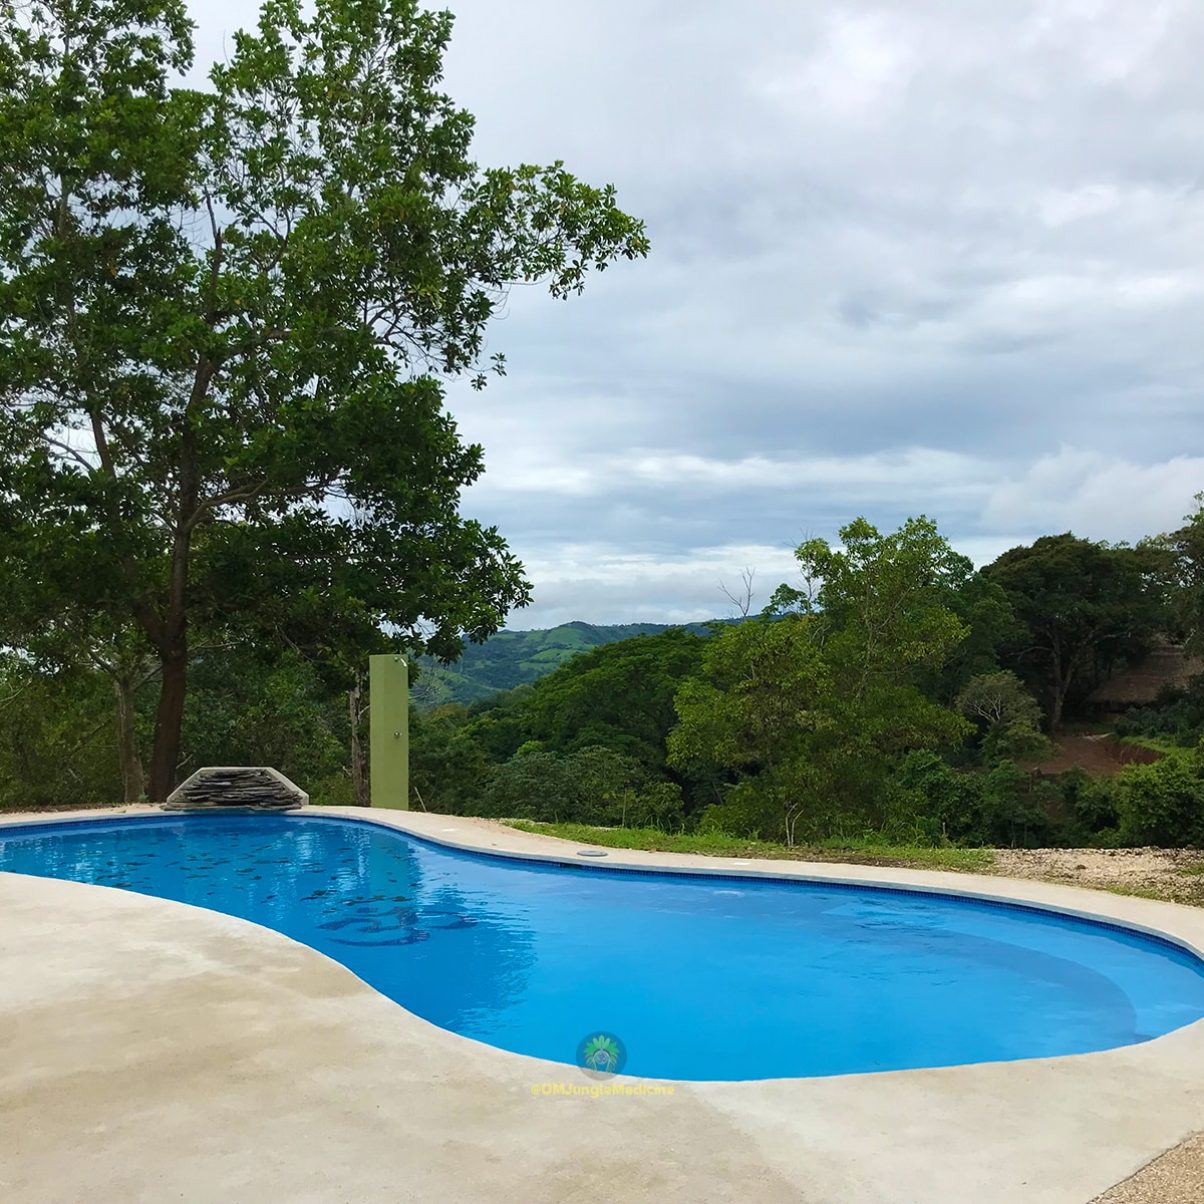 The Swimming pool at OM Jungle Medicine